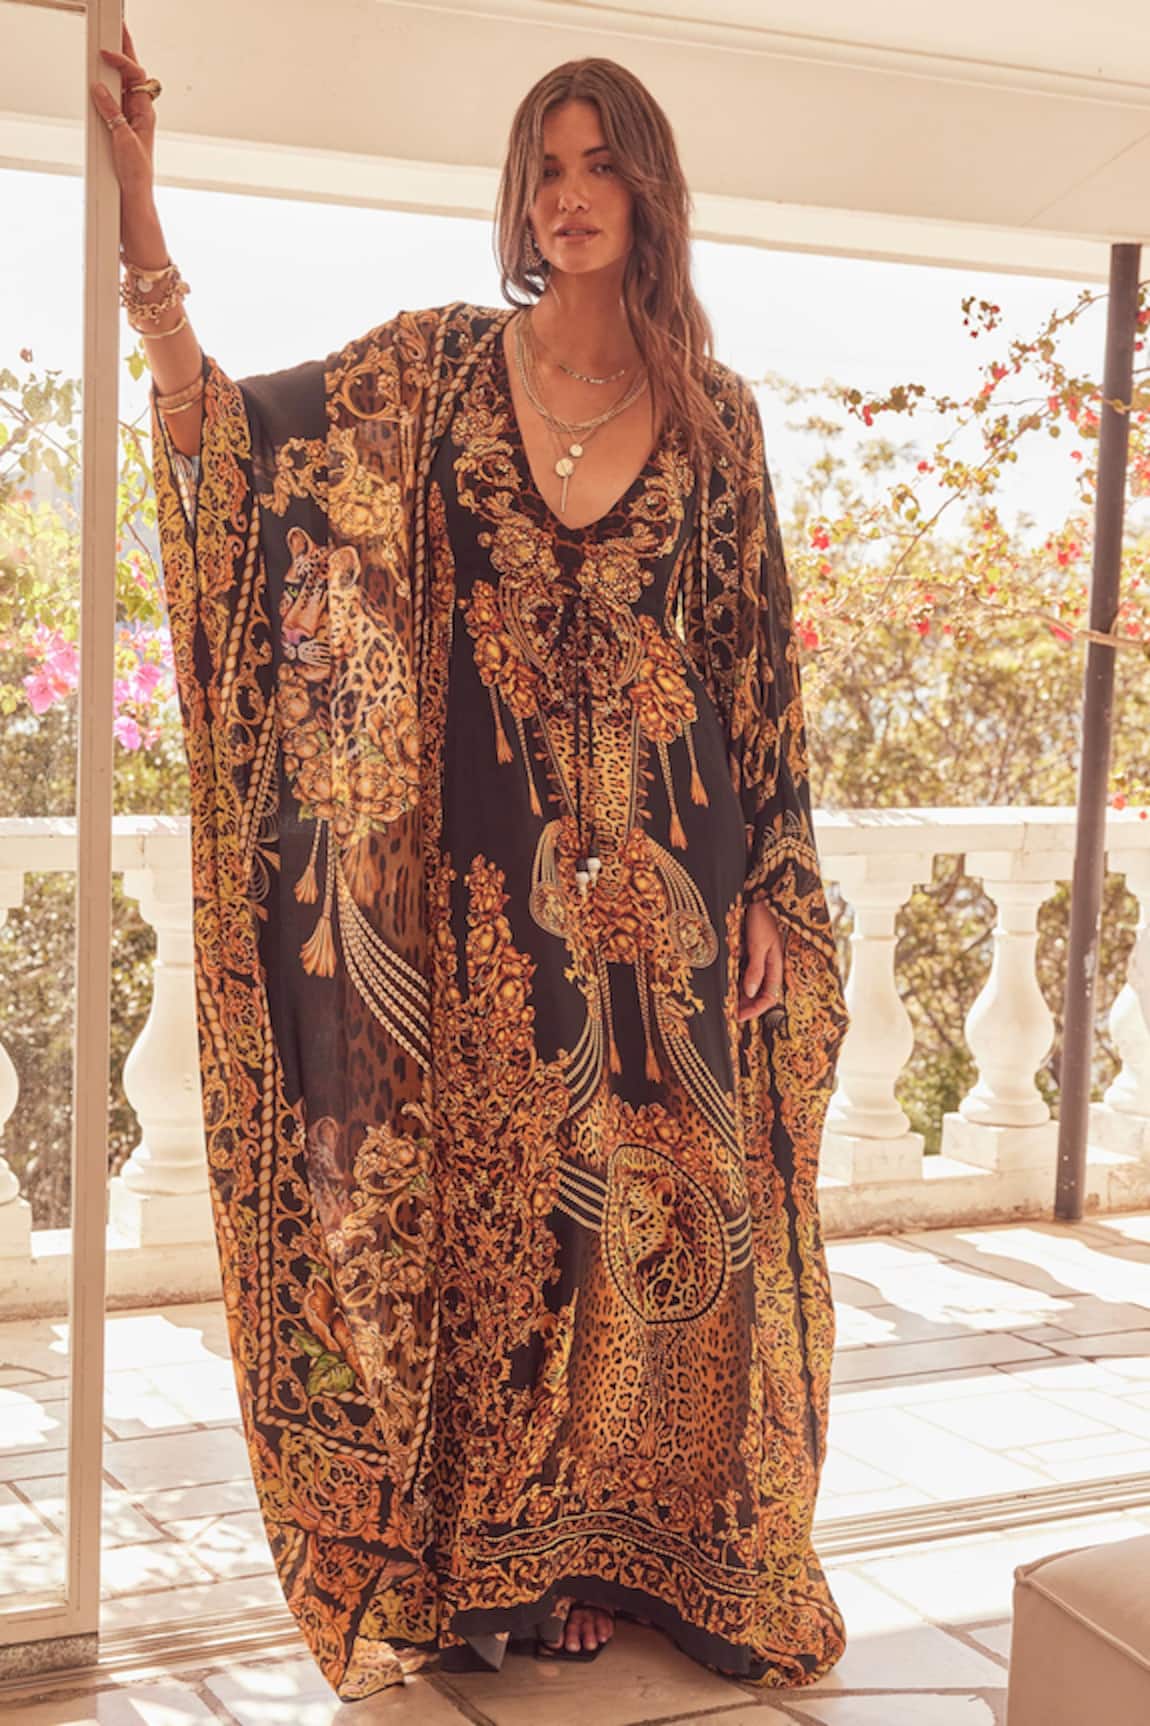 Zariaah Cleopatra Leopard Print Dress With Cape